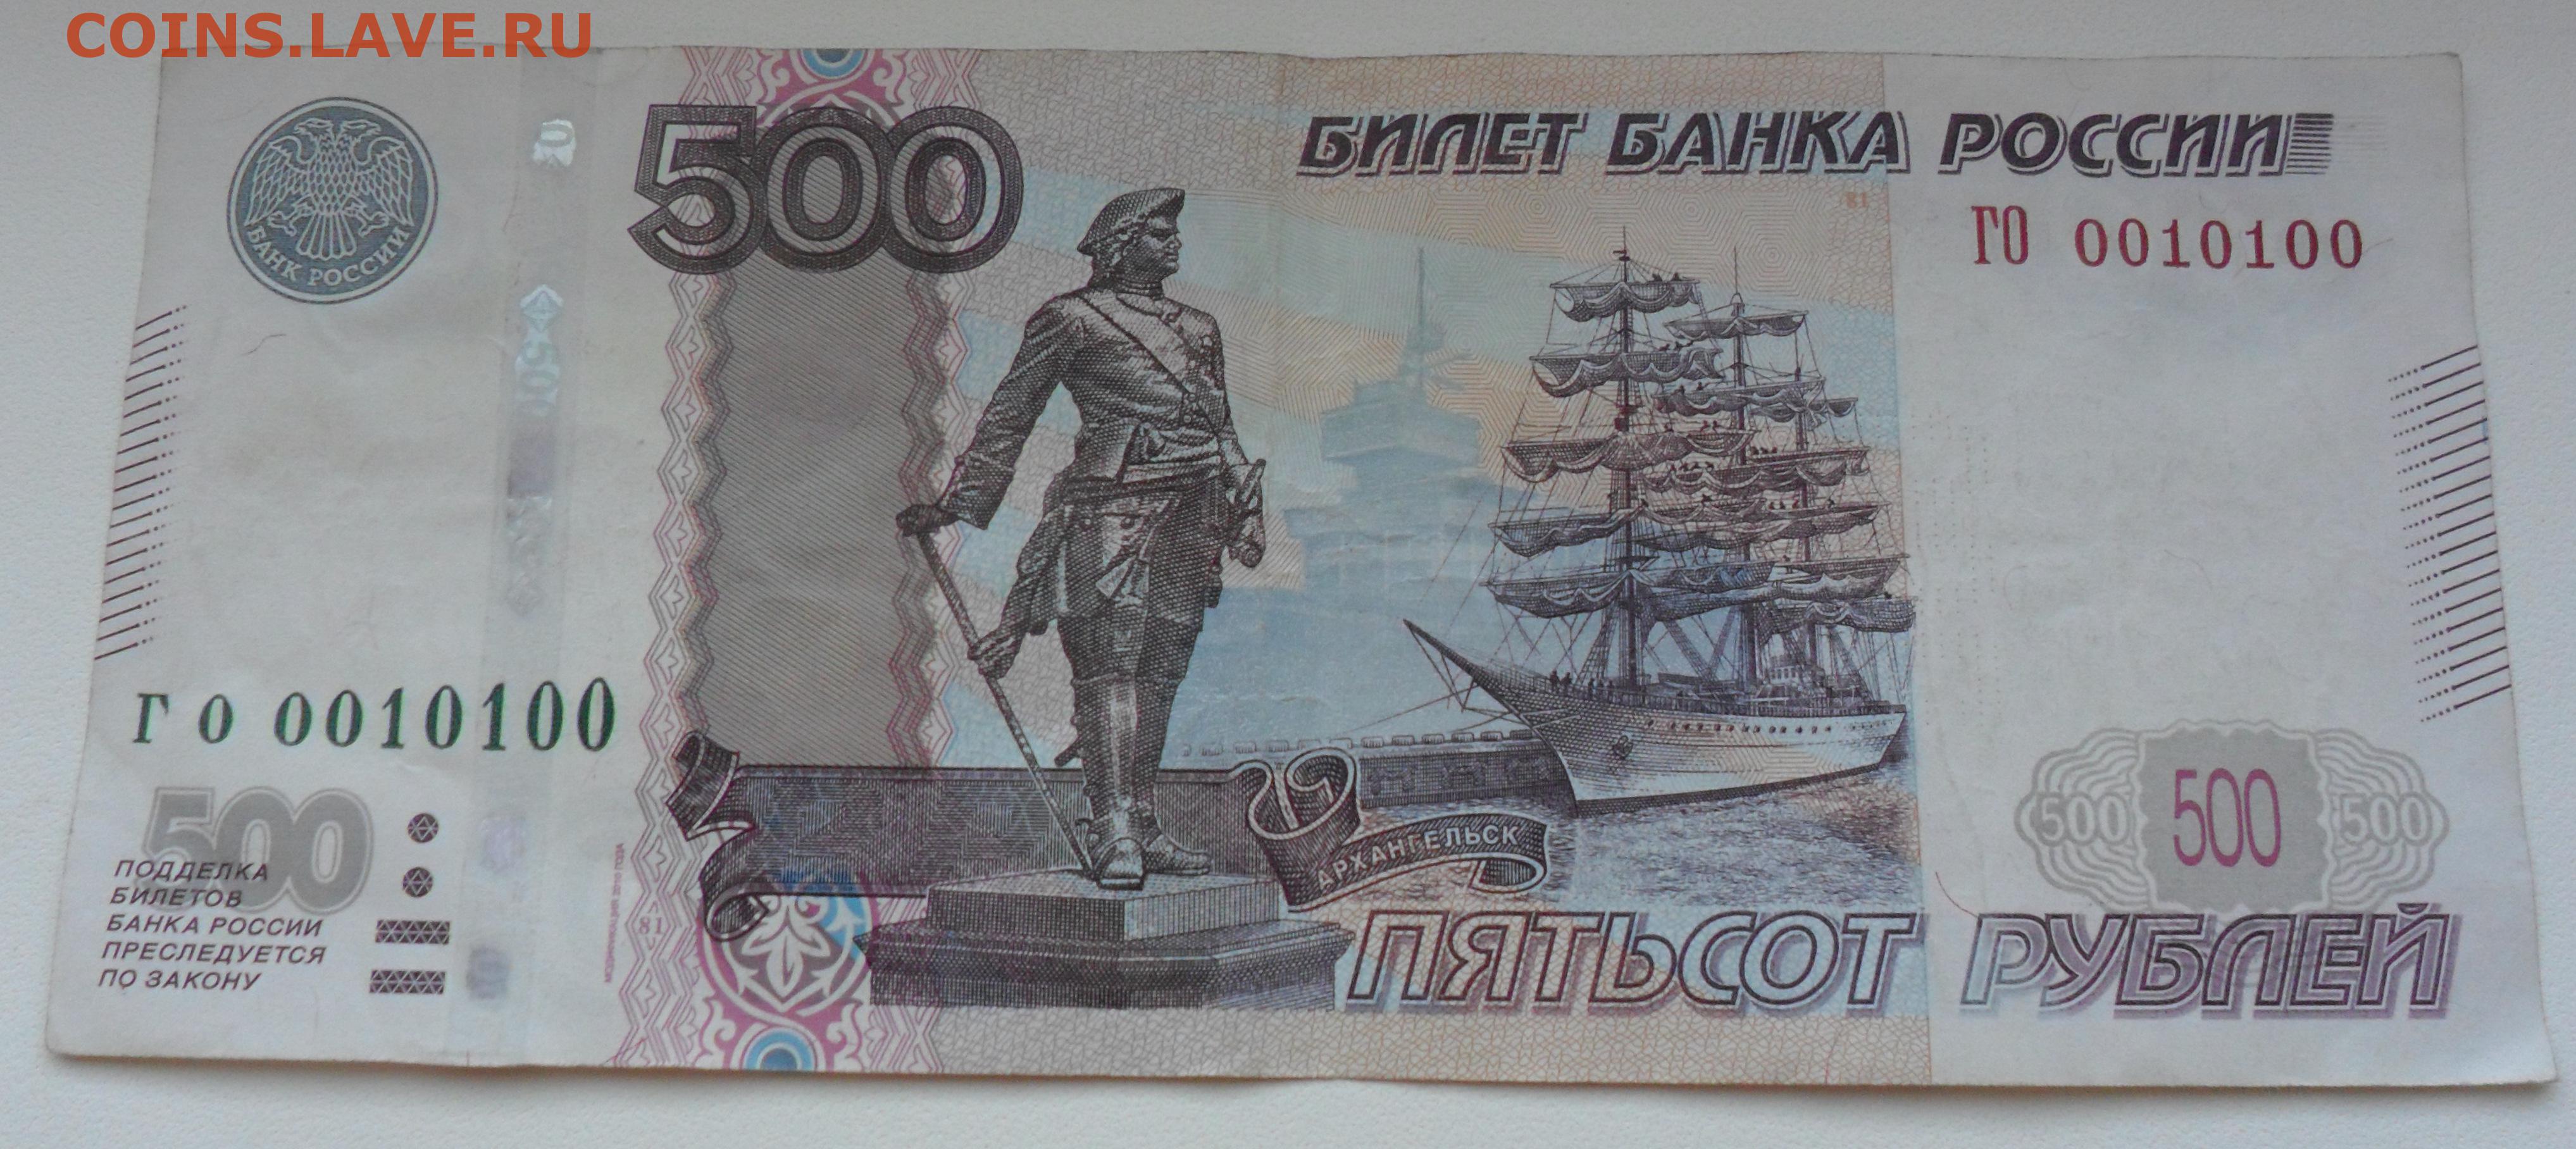 50 рублей 500 рублей. 500 Рублей до 2010 года. 500 Рублей 2010 года. 500 Рублей 2010 года модификации. 50 Рублей модификация 2010 года.